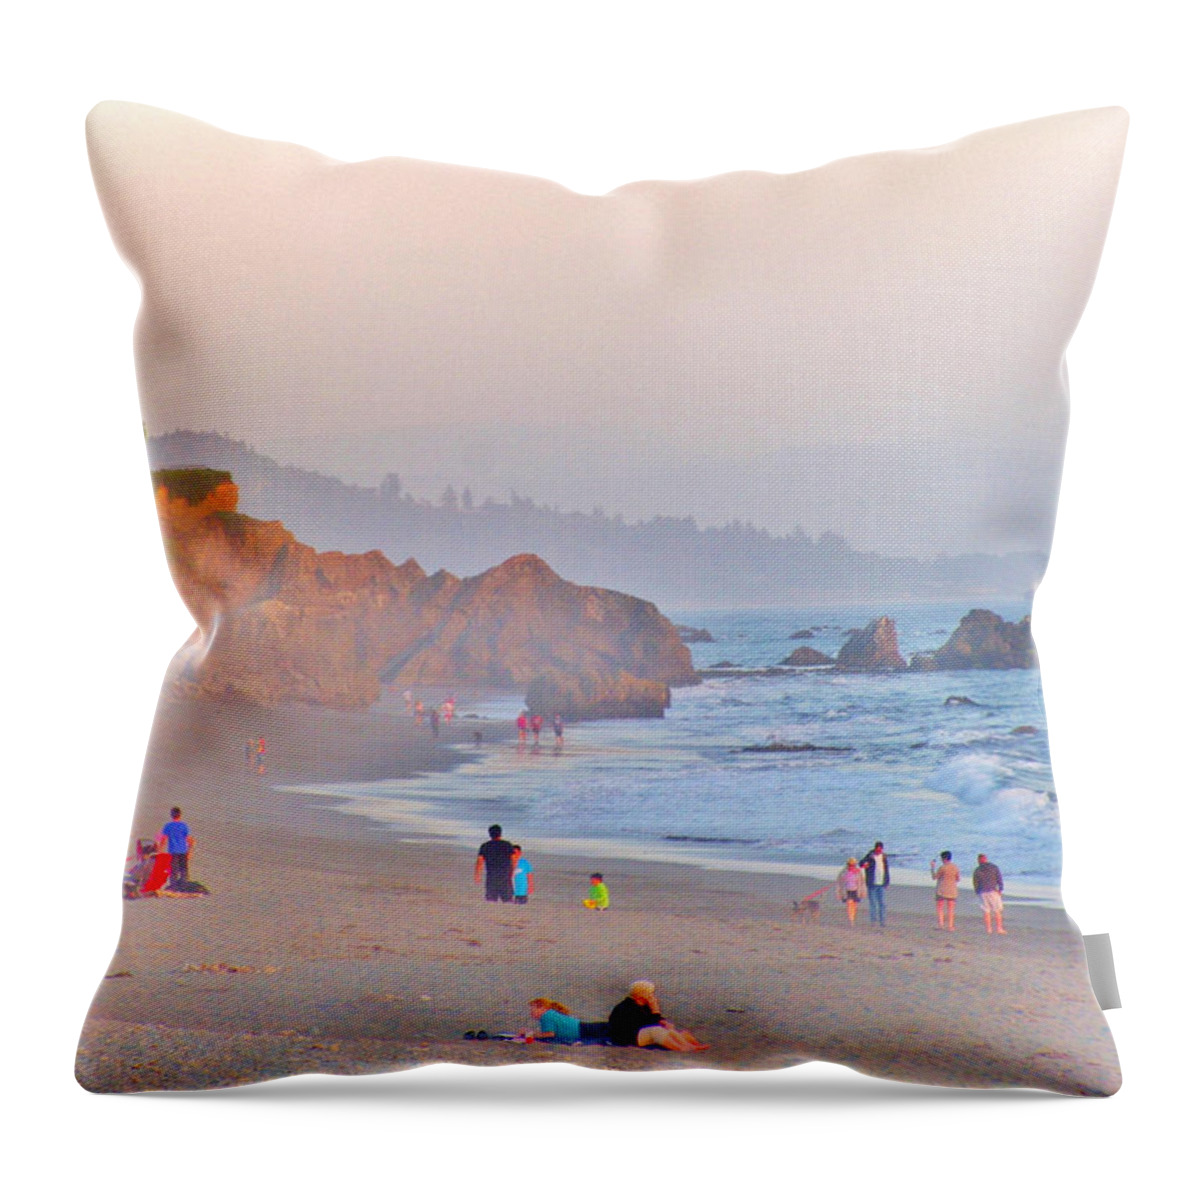 Sky Throw Pillow featuring the photograph Beach Fun by Marilyn Diaz